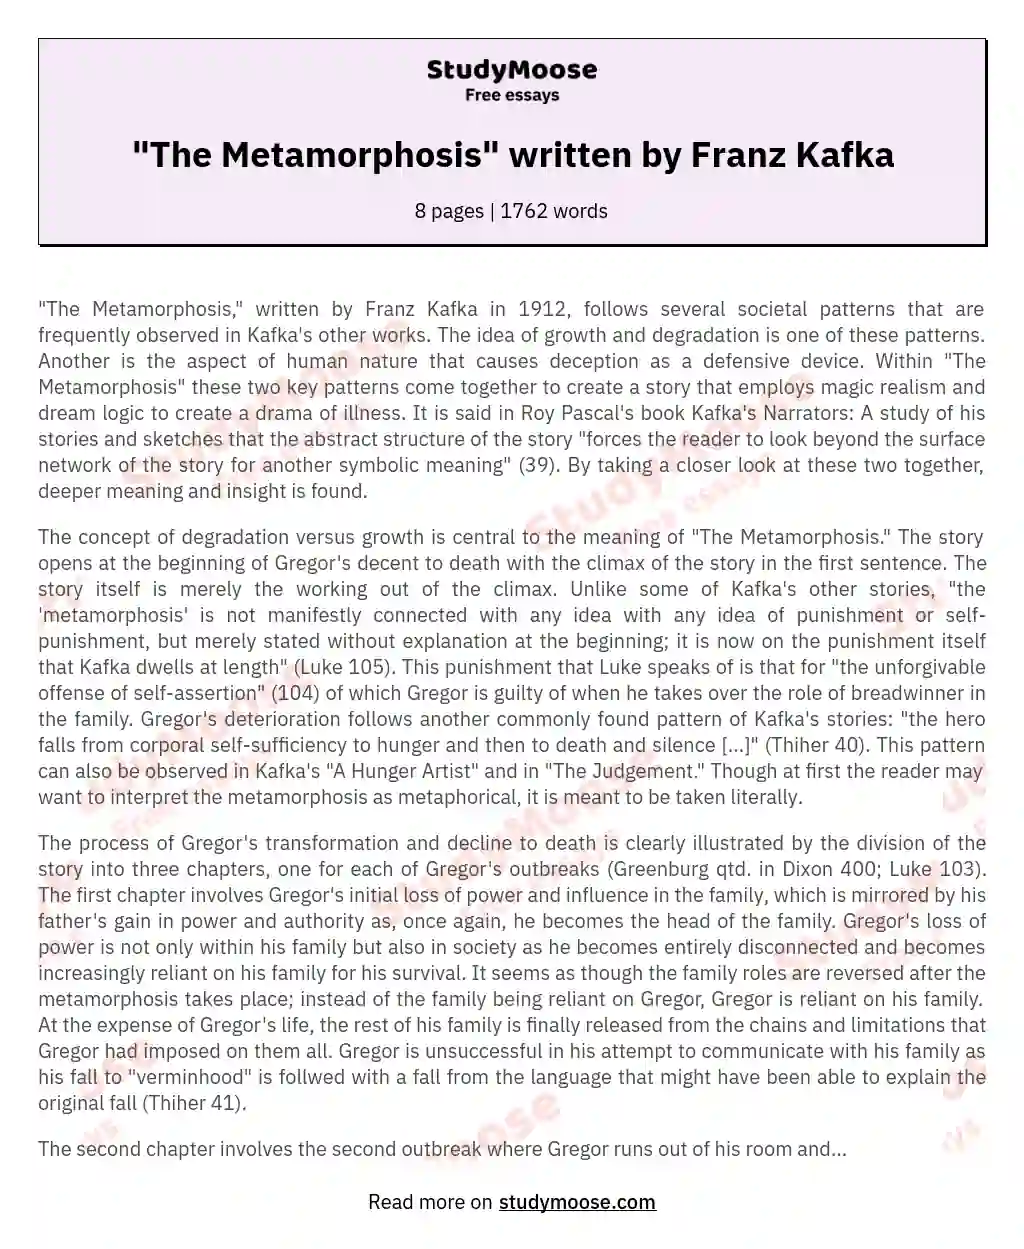 "The Metamorphosis" written by Franz Kafka